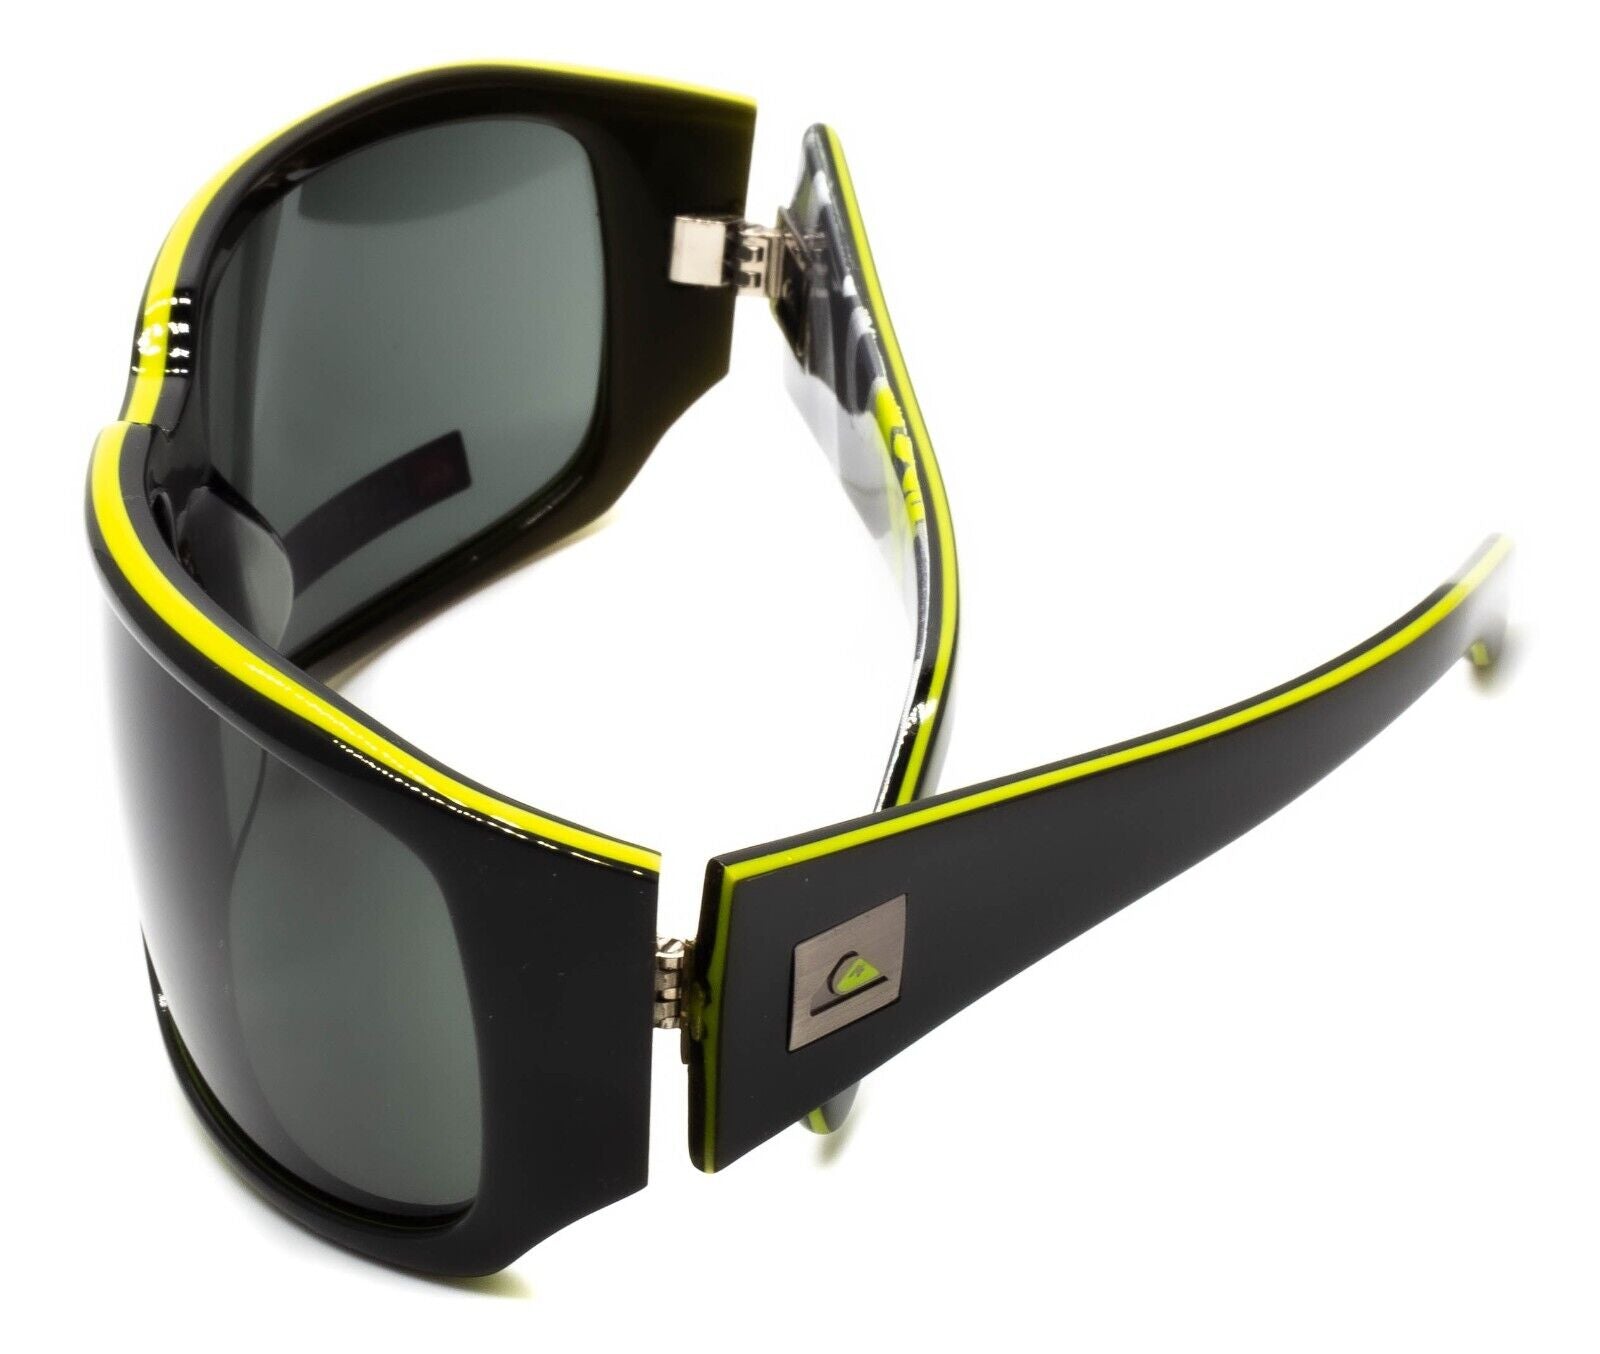 QUIKSILVER DINERO EQS1104/XSSG UV CAT Sunglasses Eyewear Glasses GGV Shades 3 64mm - Eyewear